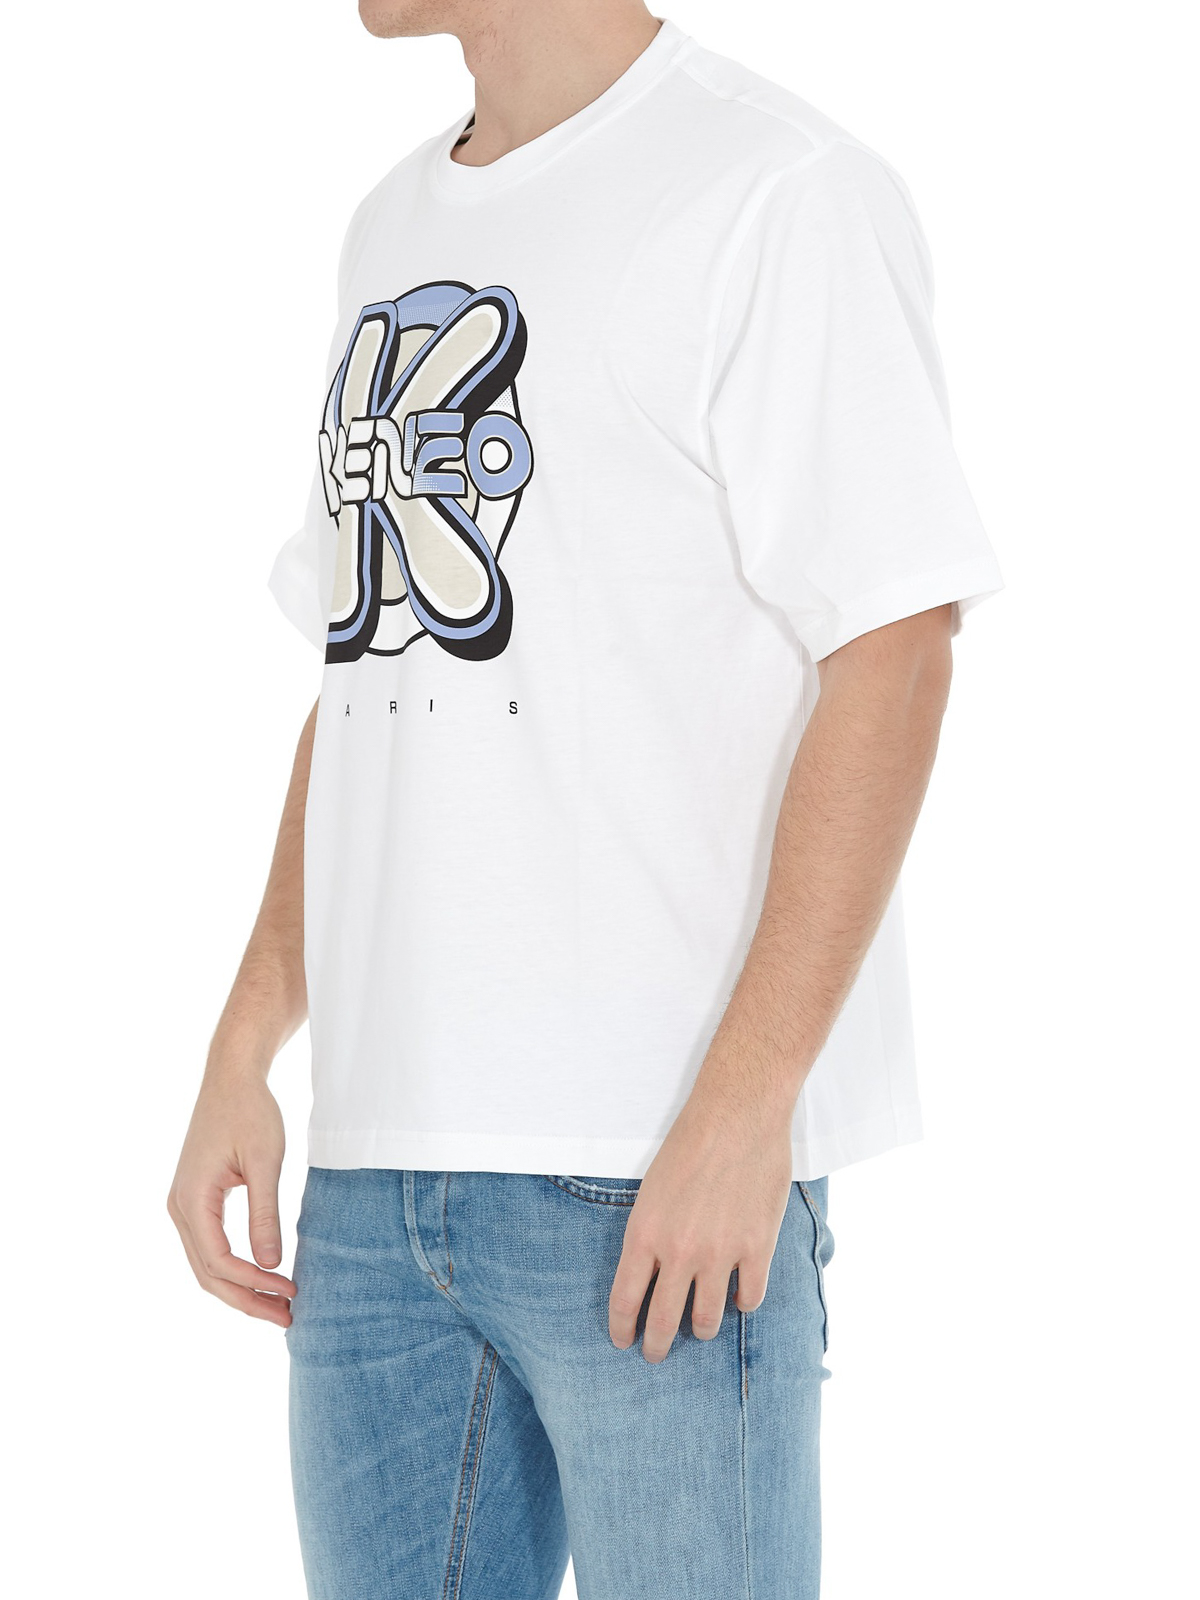 Sur estaño Conciliador Camisetas Kenzo - Camiseta - Kenzo Surf - FA55TS5054SH01 | iKRIX.com